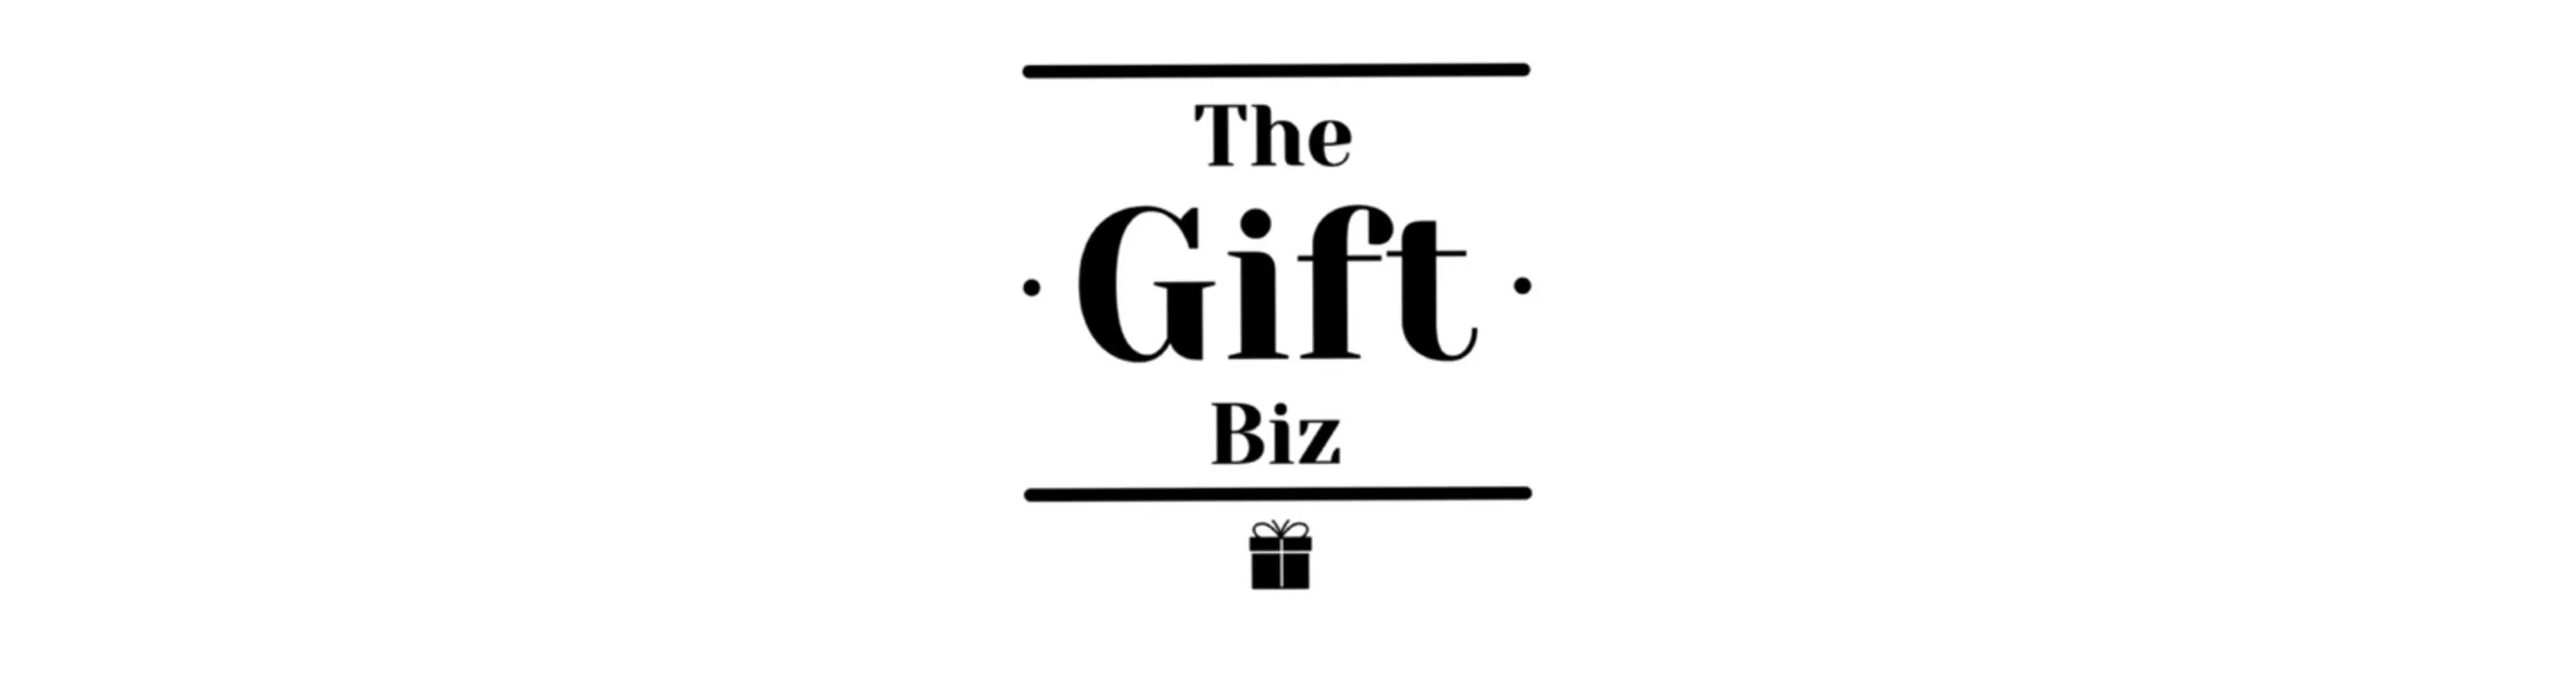 The Gift Biz